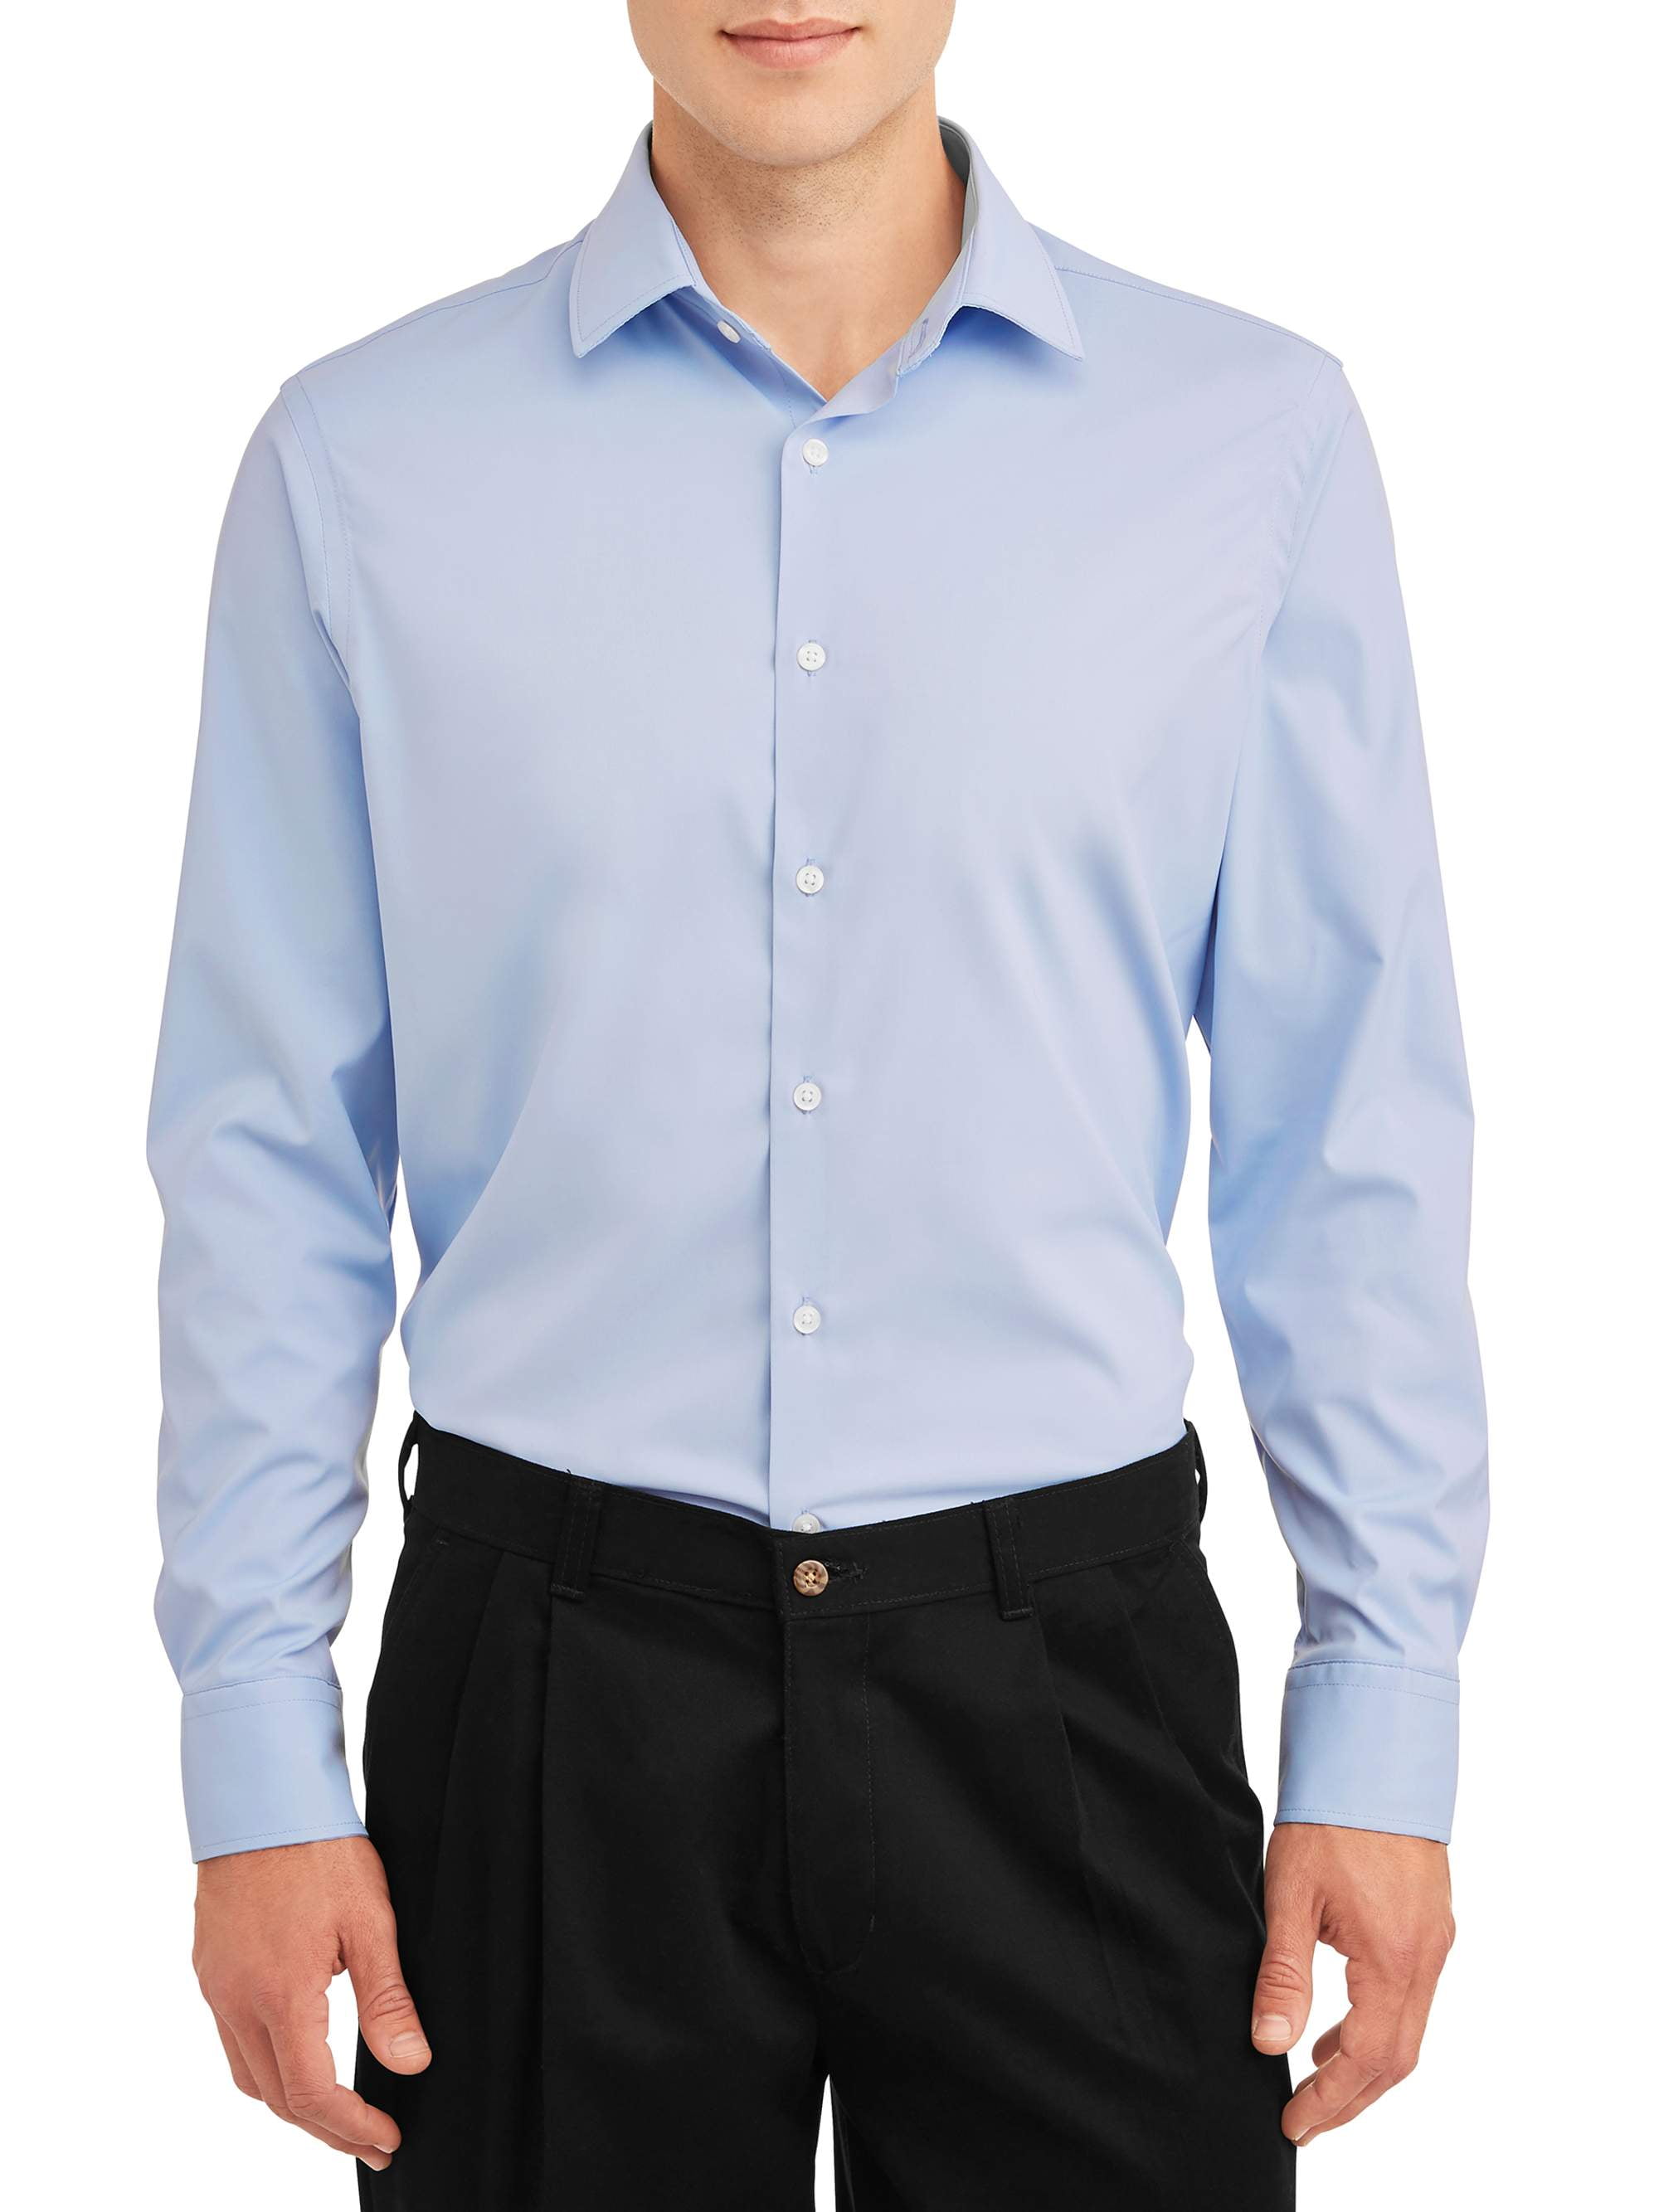 J.M. Haggar Men's Premium Performance Slim Fit Dress Shirt - Walmart.com